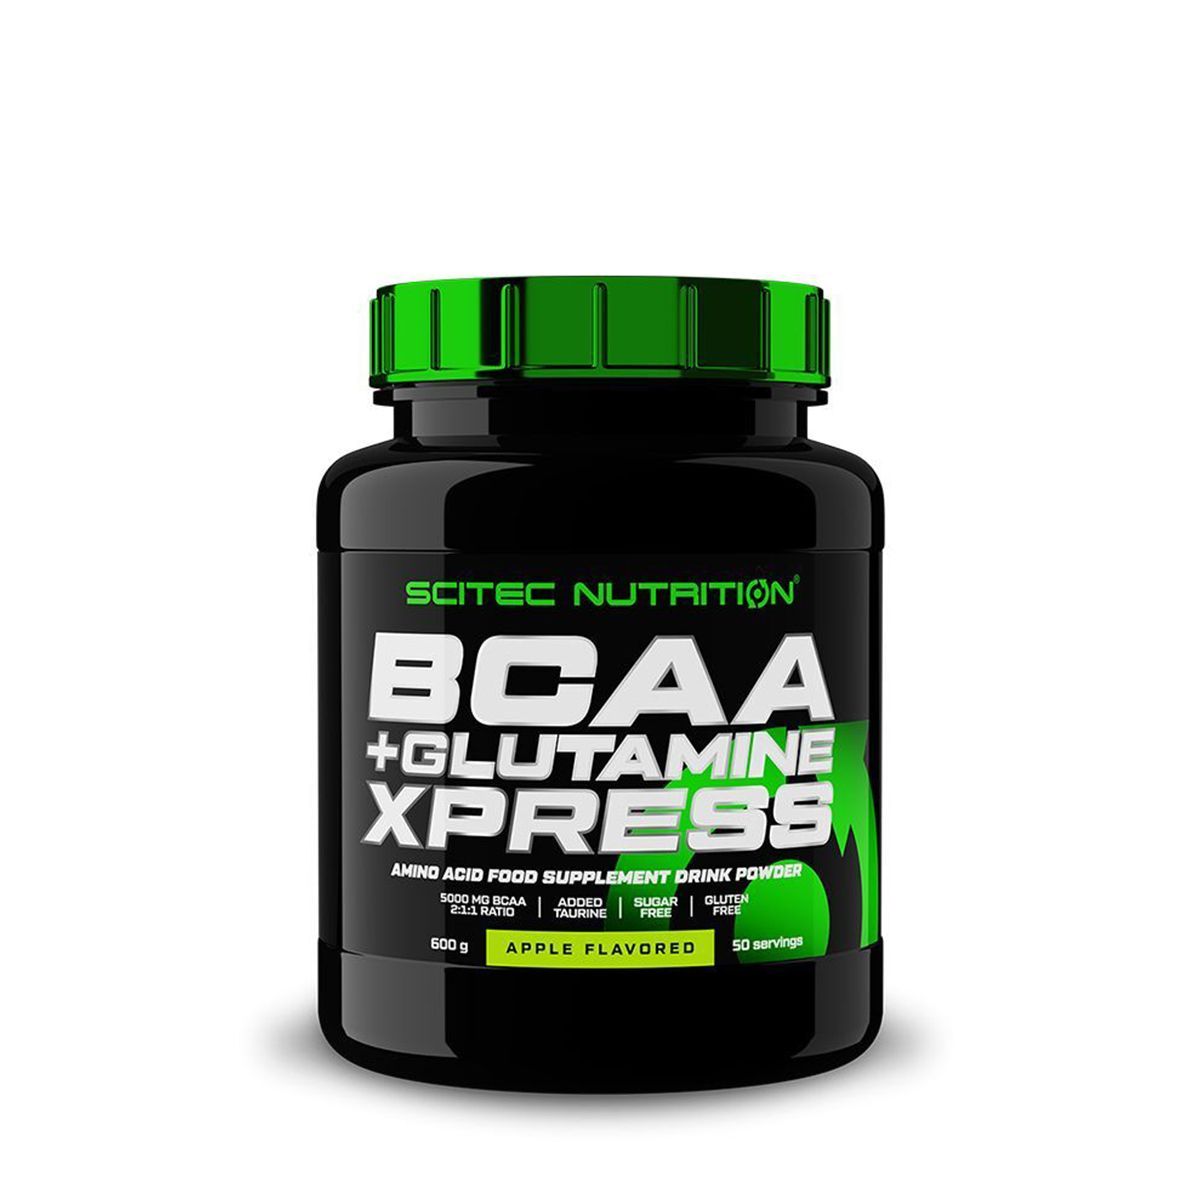 Scitec Nutrition - BCAA + Glutemine Xpress - Mega Dose 1:1 Ratio - 600g